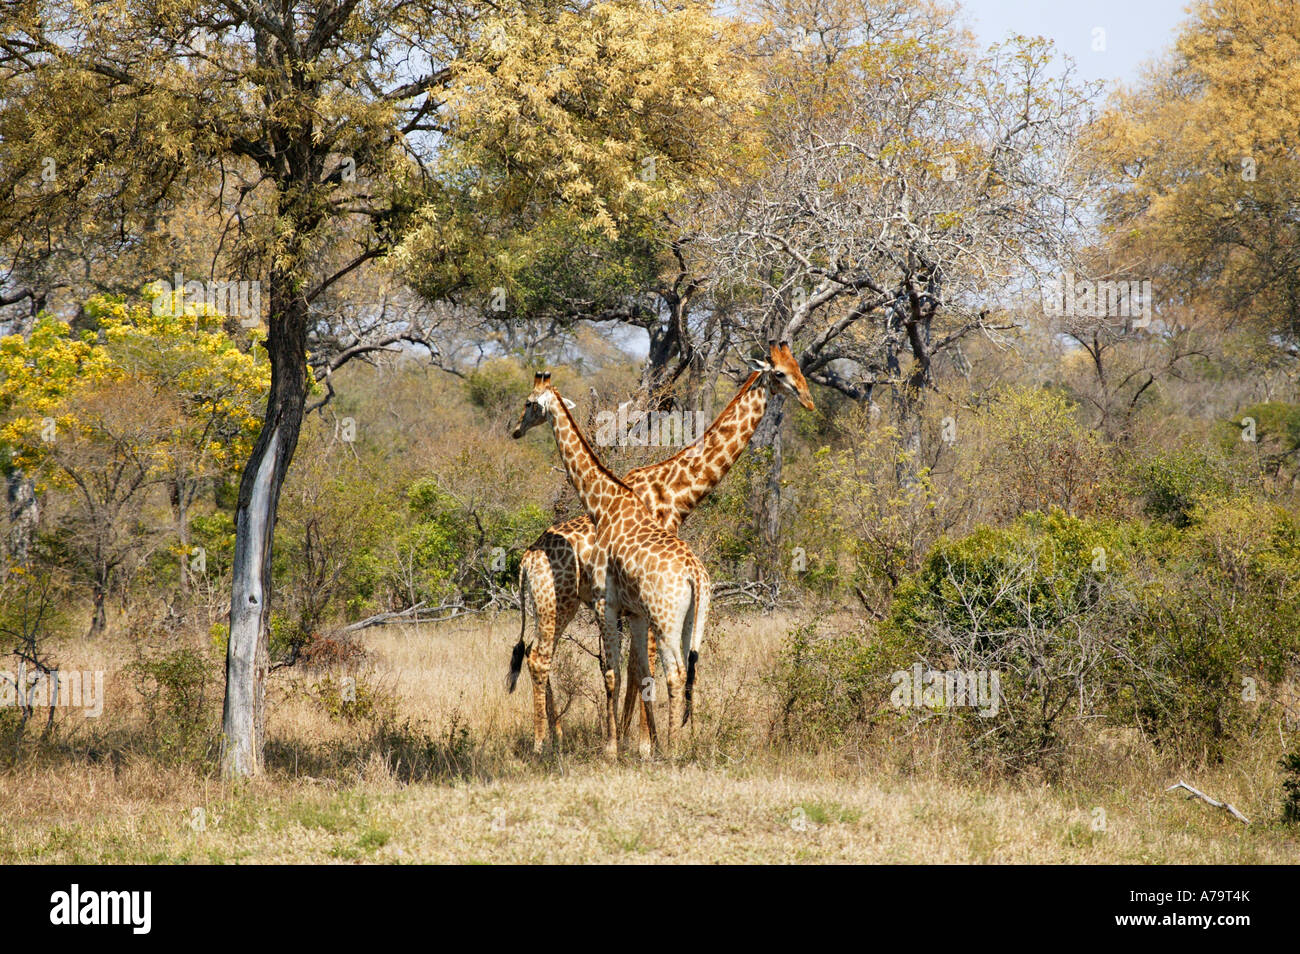 Two giraffes beneath an knobthorn tree Acacia nigrescens in bloom Sabi Sand Game Reserve Mpumalanga South Africa Stock Photo